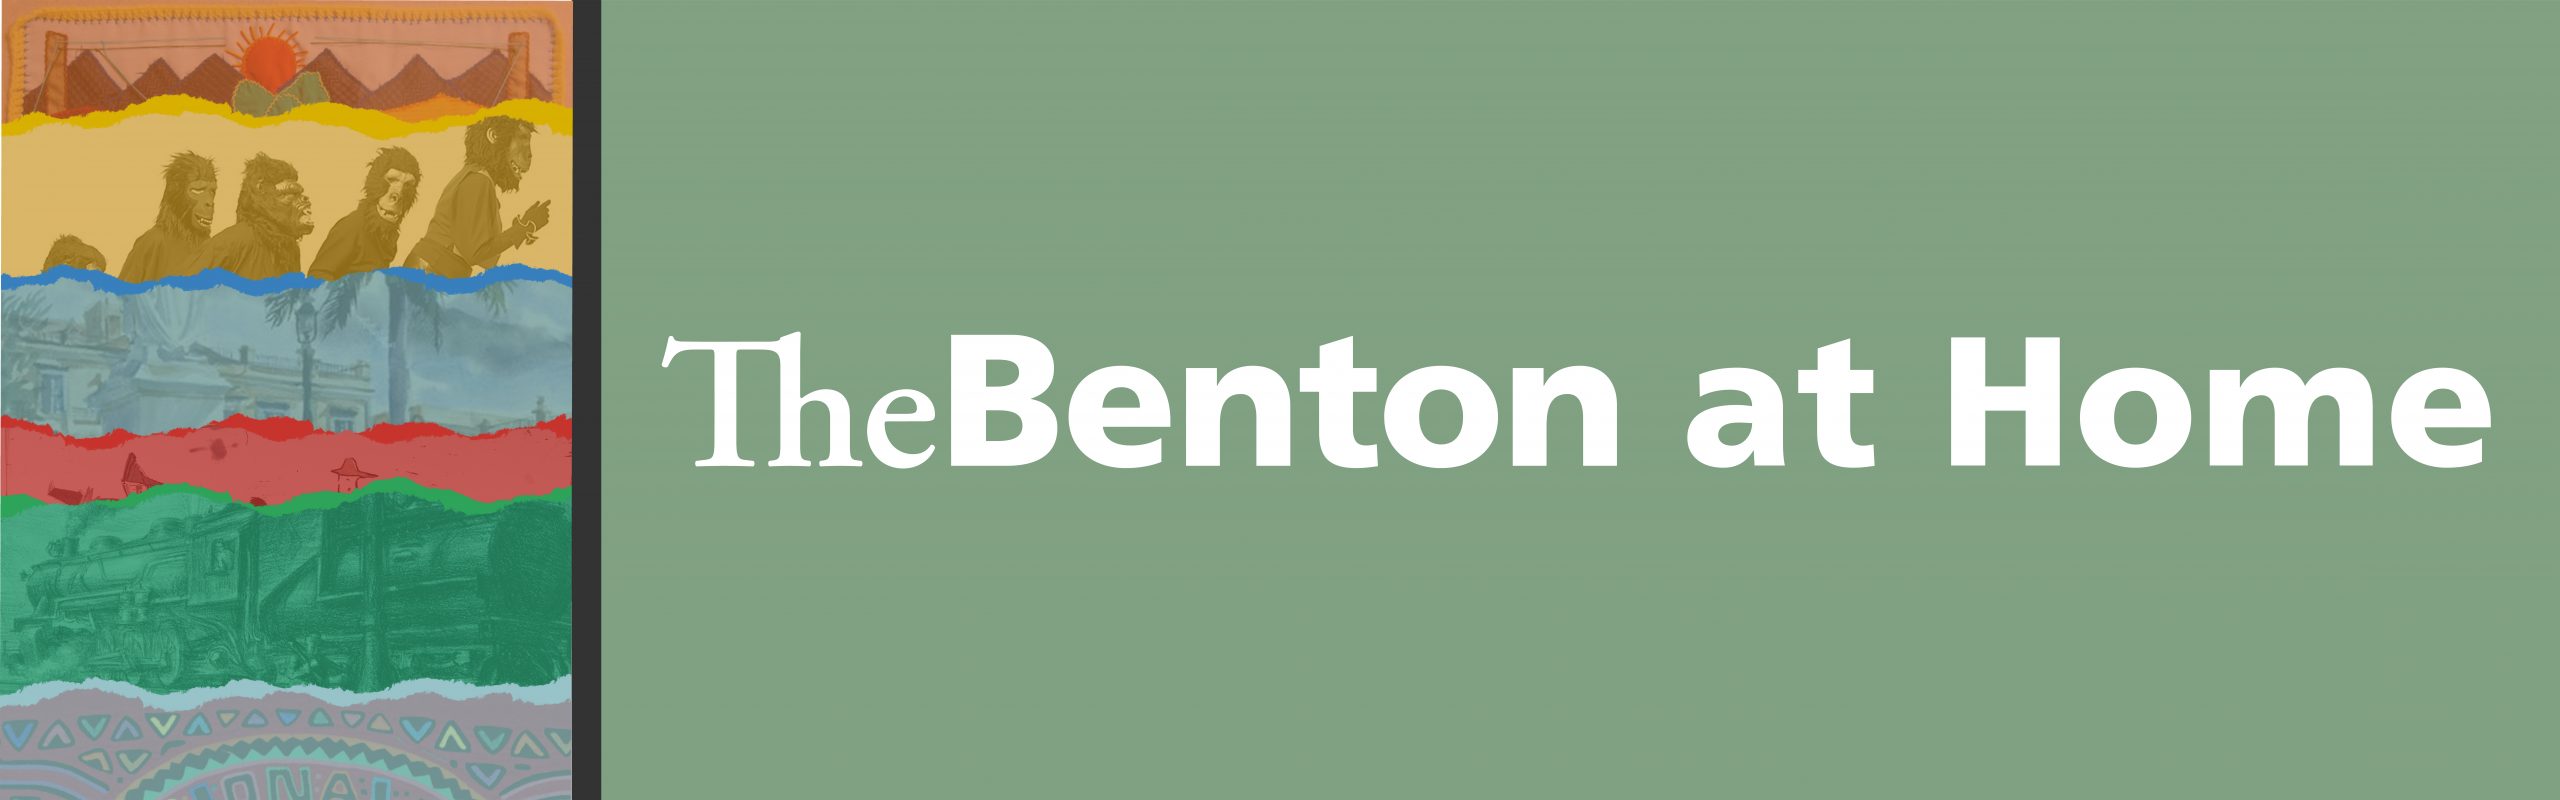 The Benton at Home